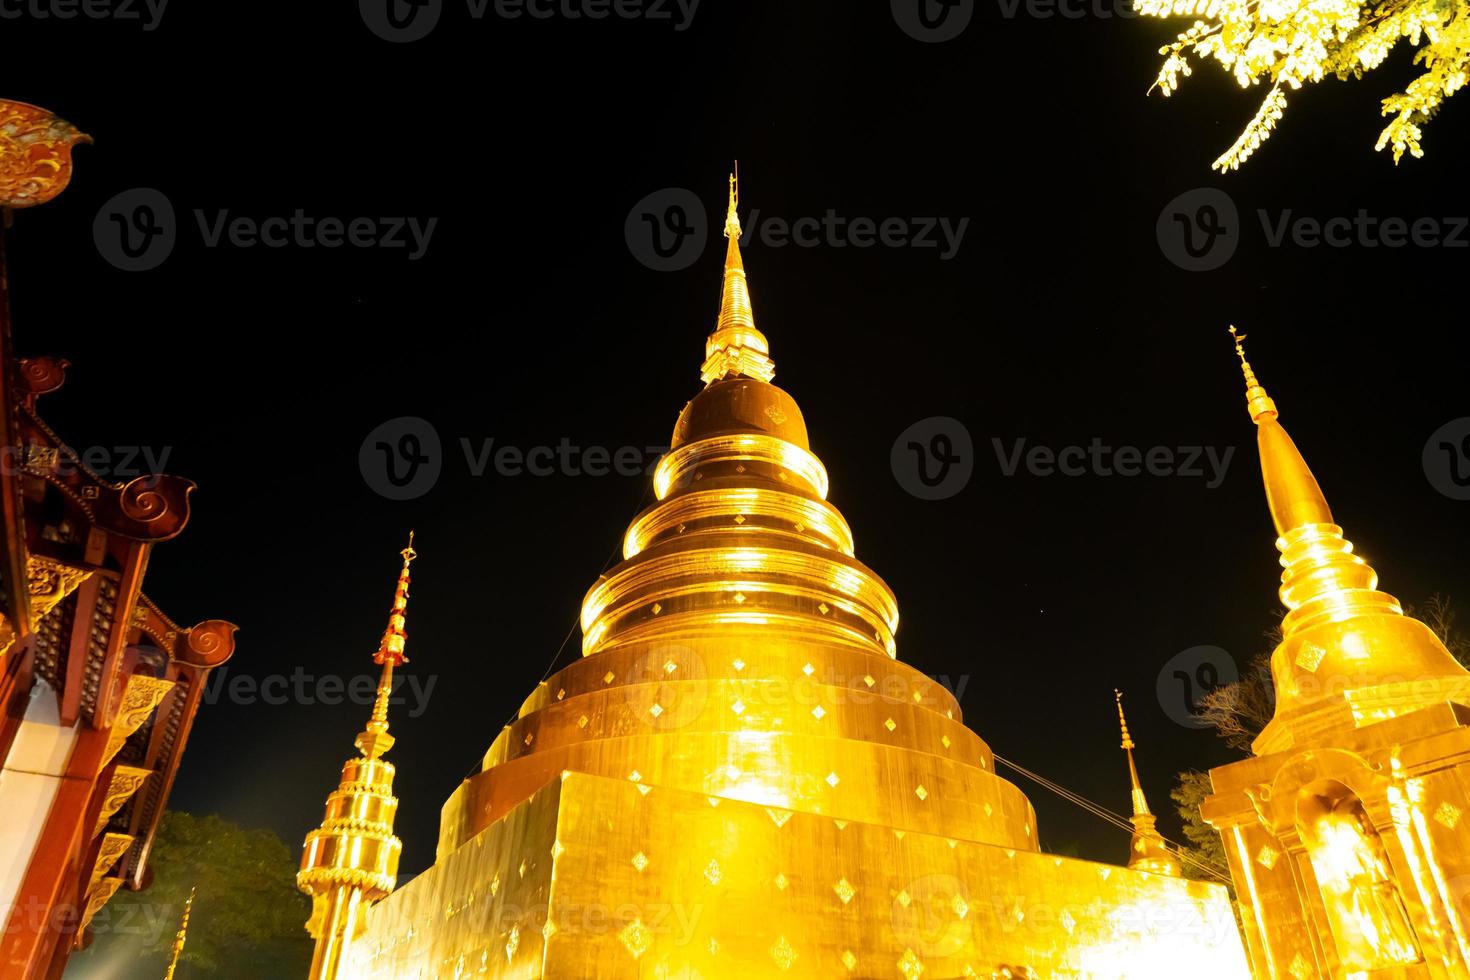 prachtige architectuur bij wat phra sing waramahavihan-tempel in de provincie chiang mai, thailand. foto